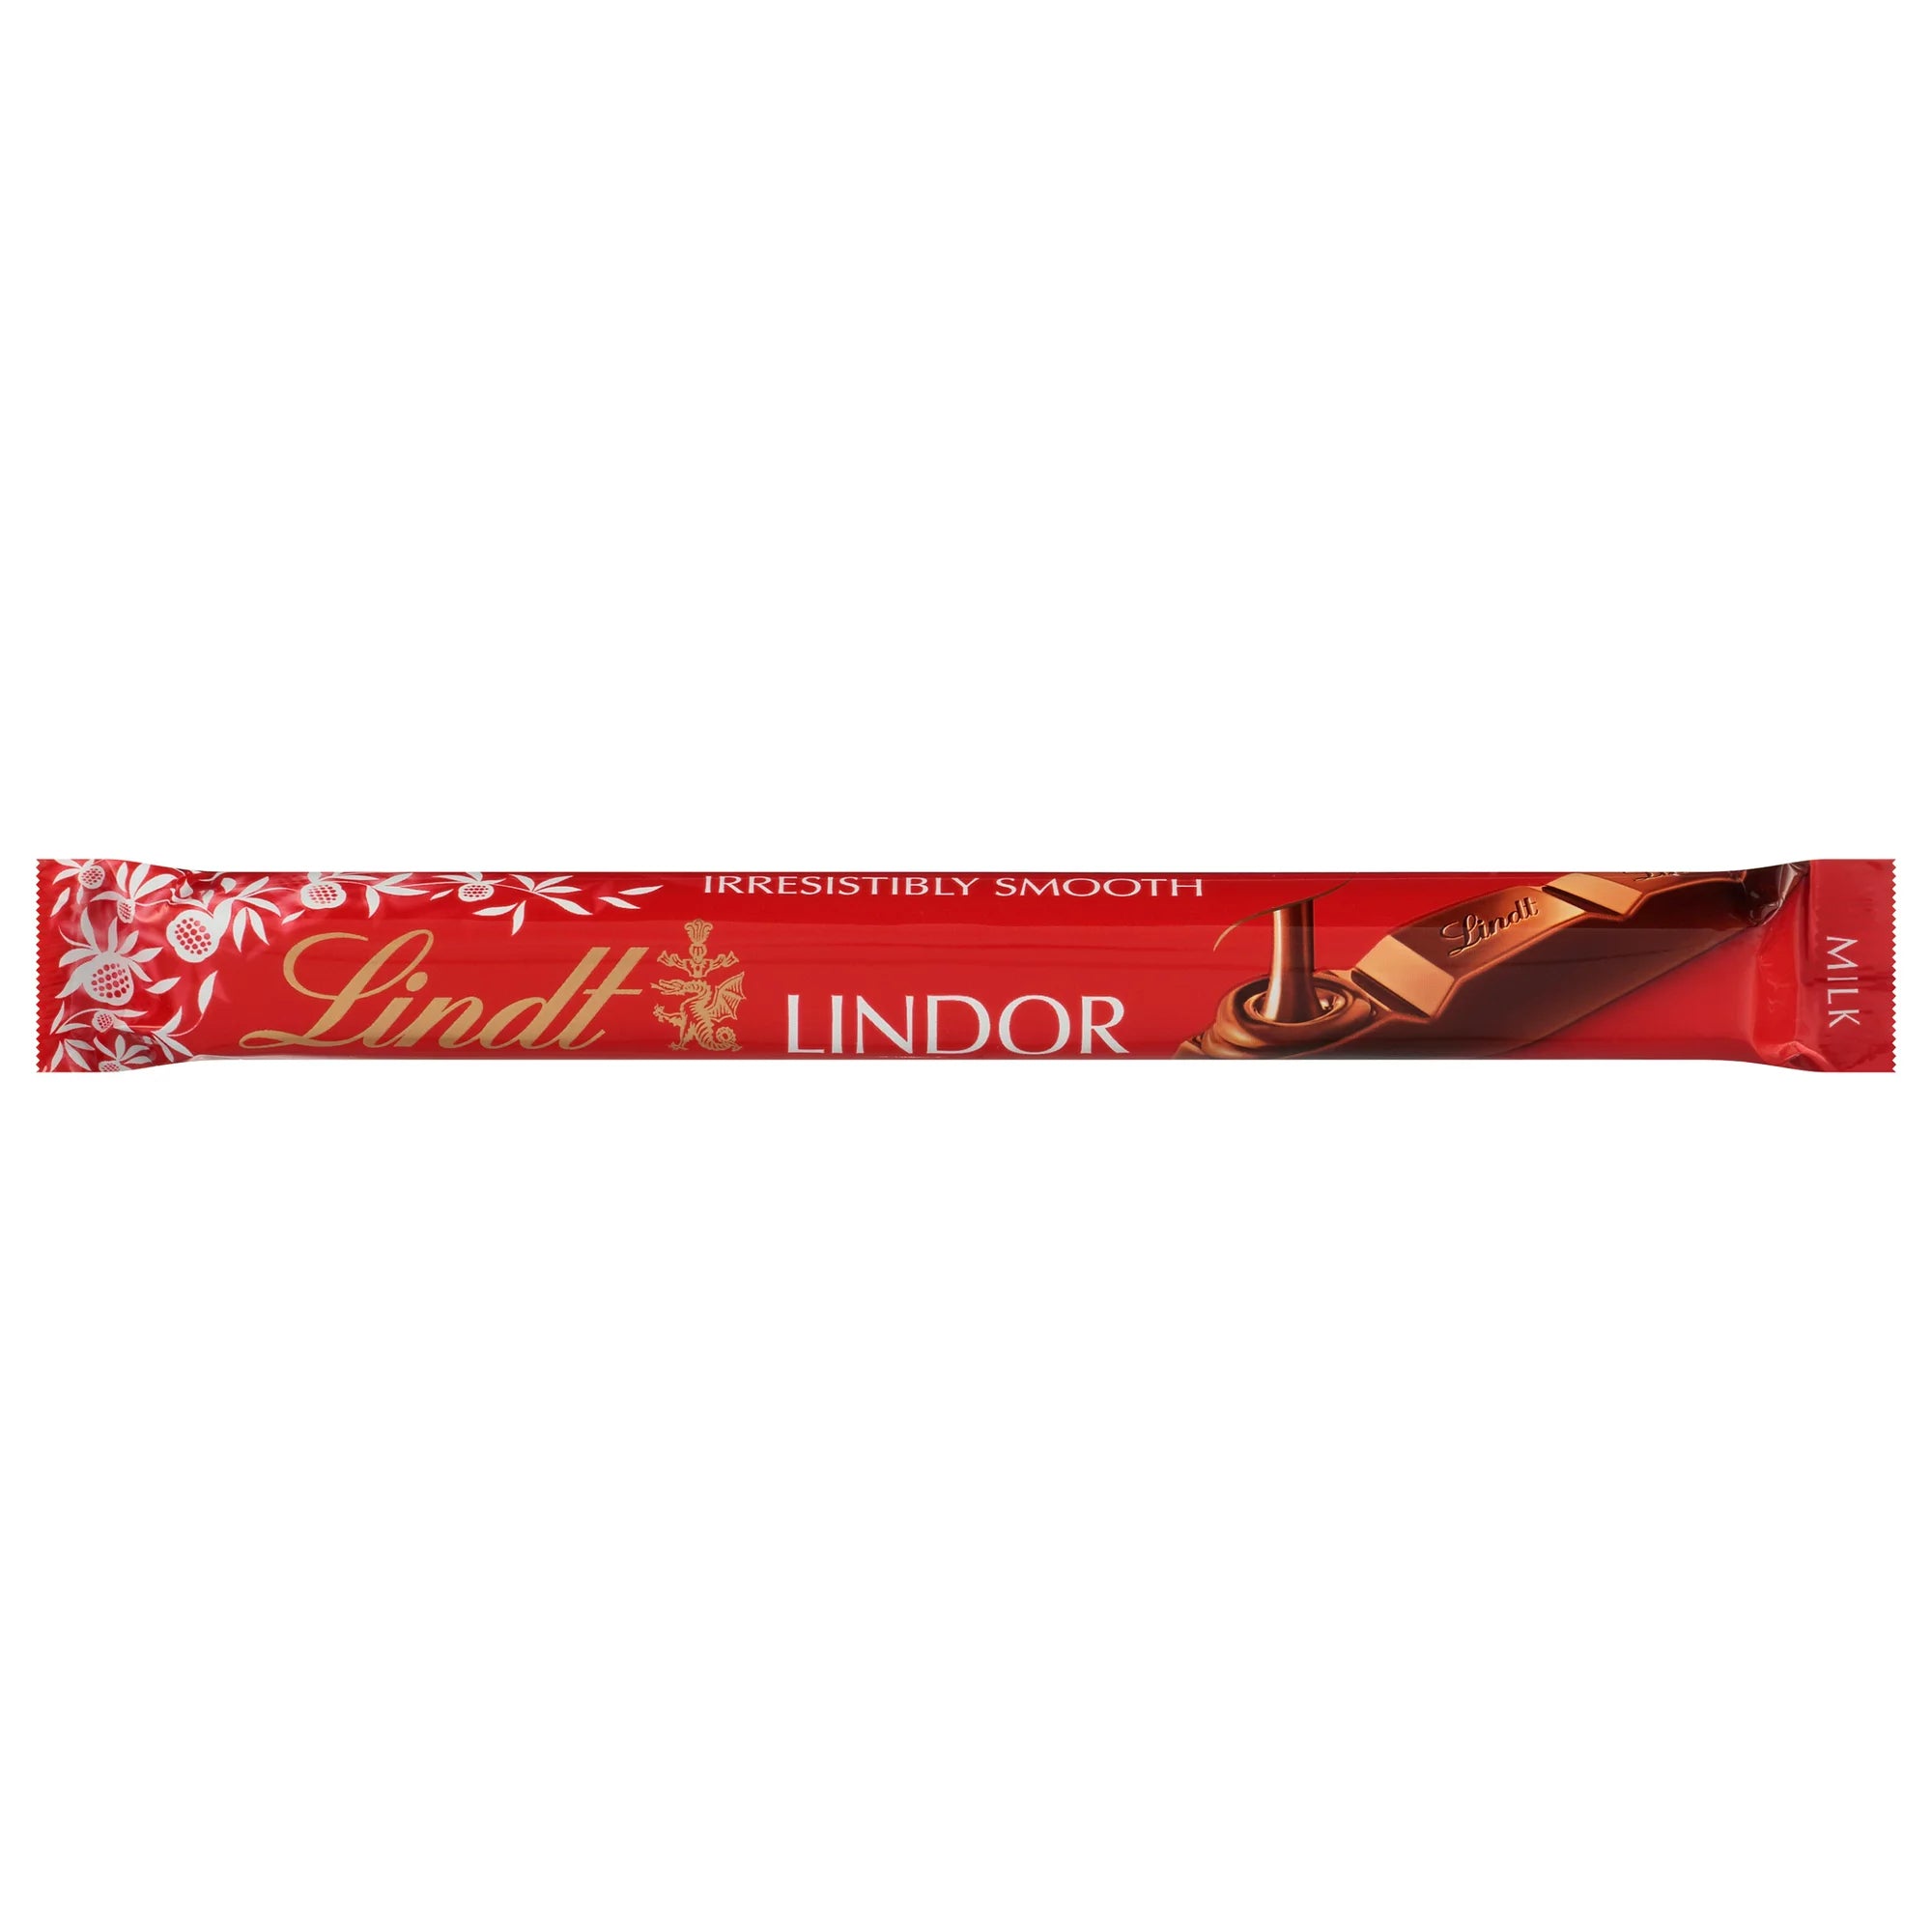 Lindt Lindor Milk Chocolate Truffle Bars 1.3oz, 30 Count Box